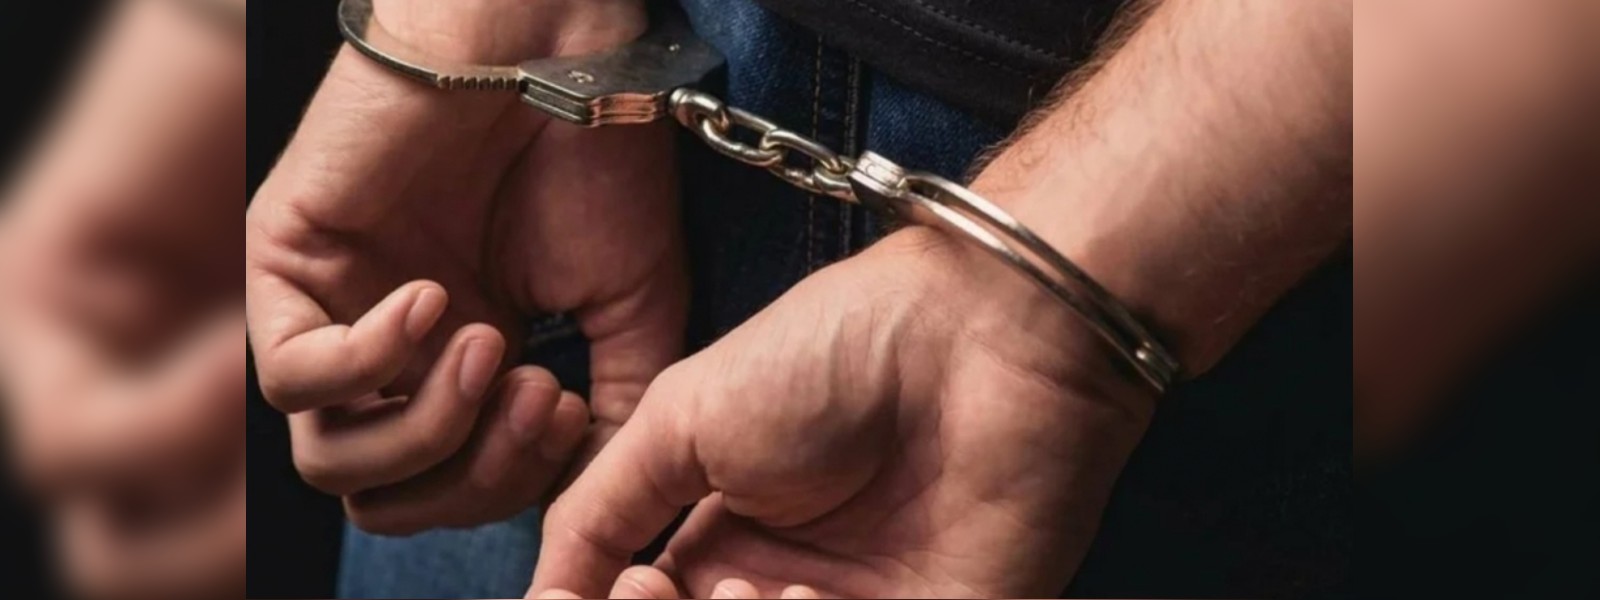 SLPP UC member arrested with firearms, sword